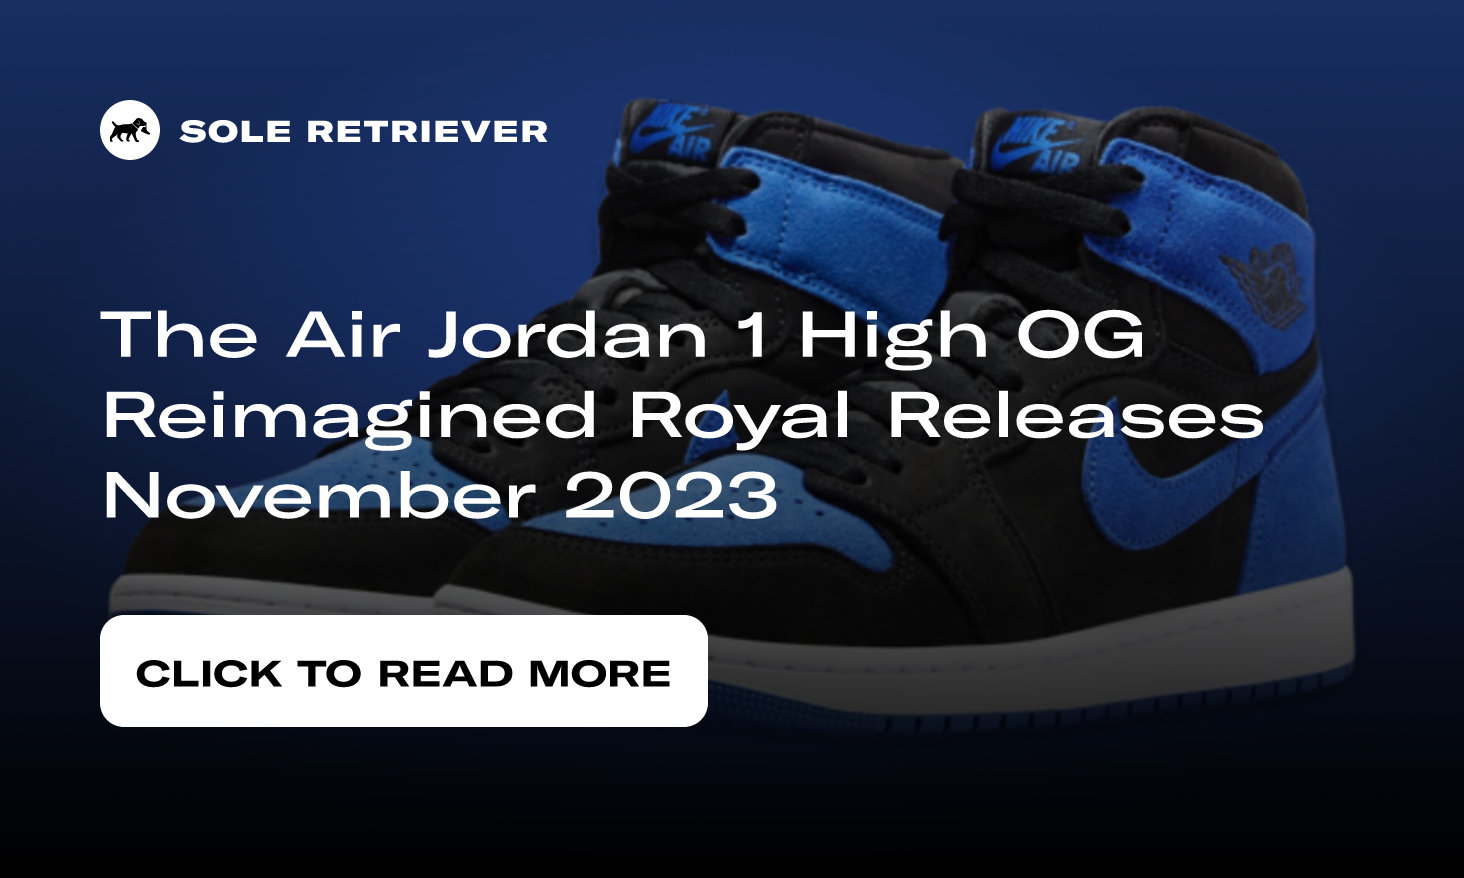 Air Jordan 1 Retro High OG Royal Reimagined